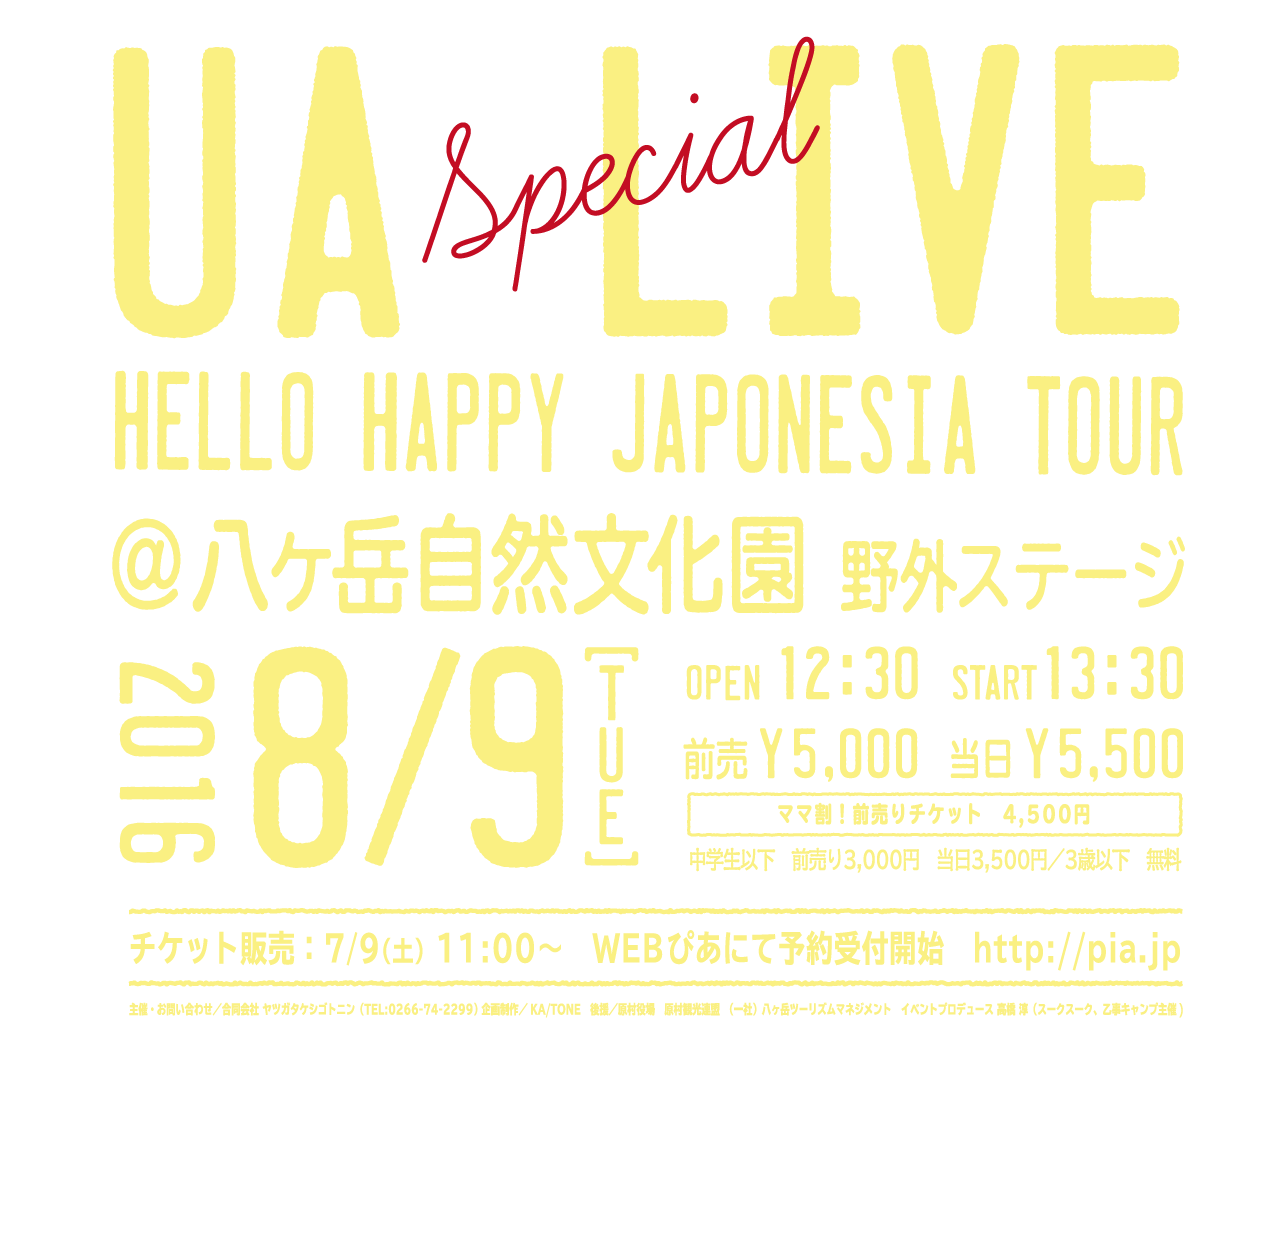 UA SPECIAL LIVE 〜 HELLO HAPPY JAPONESIA TOUR @八ヶ岳自然文化園 野外ステージ 2016/08/09 TUE OPEN 12:30 START 13:30